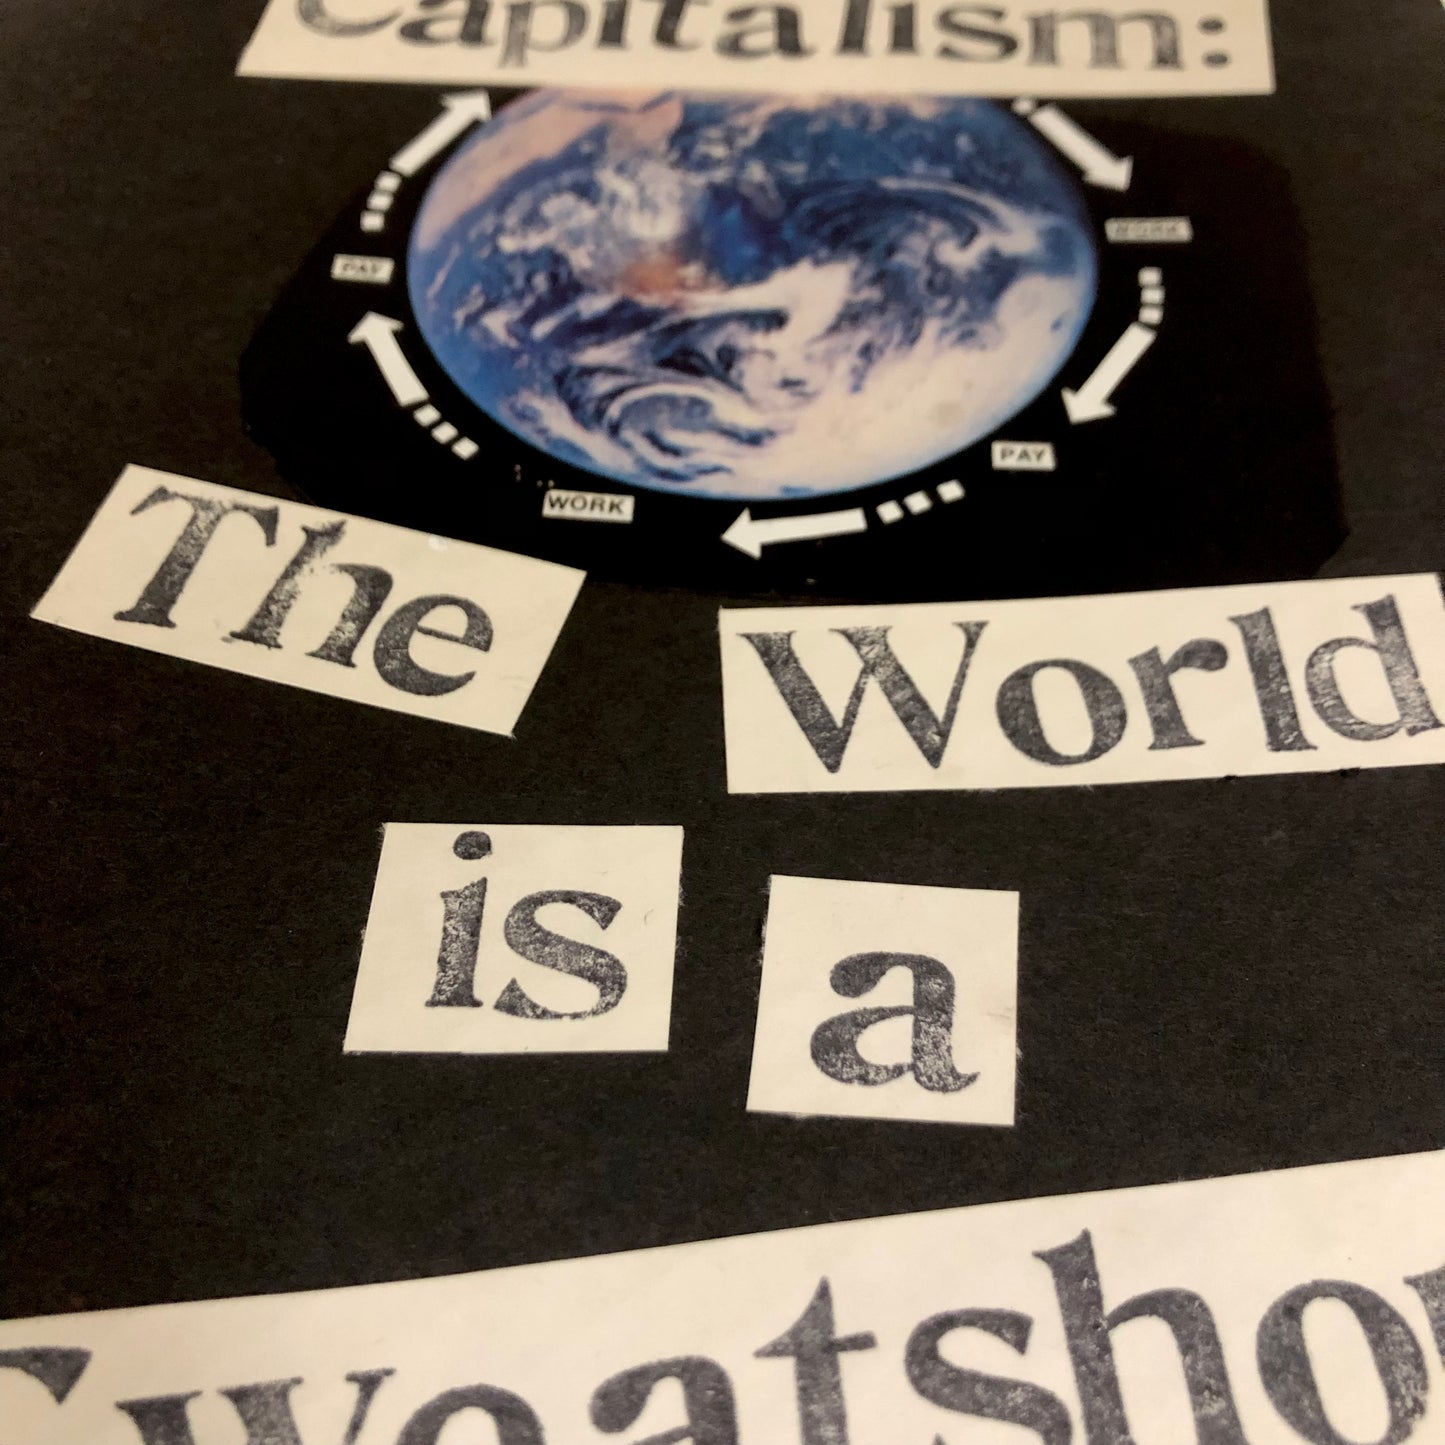 Winston Smith "The World is a Sweatshop" (1982)